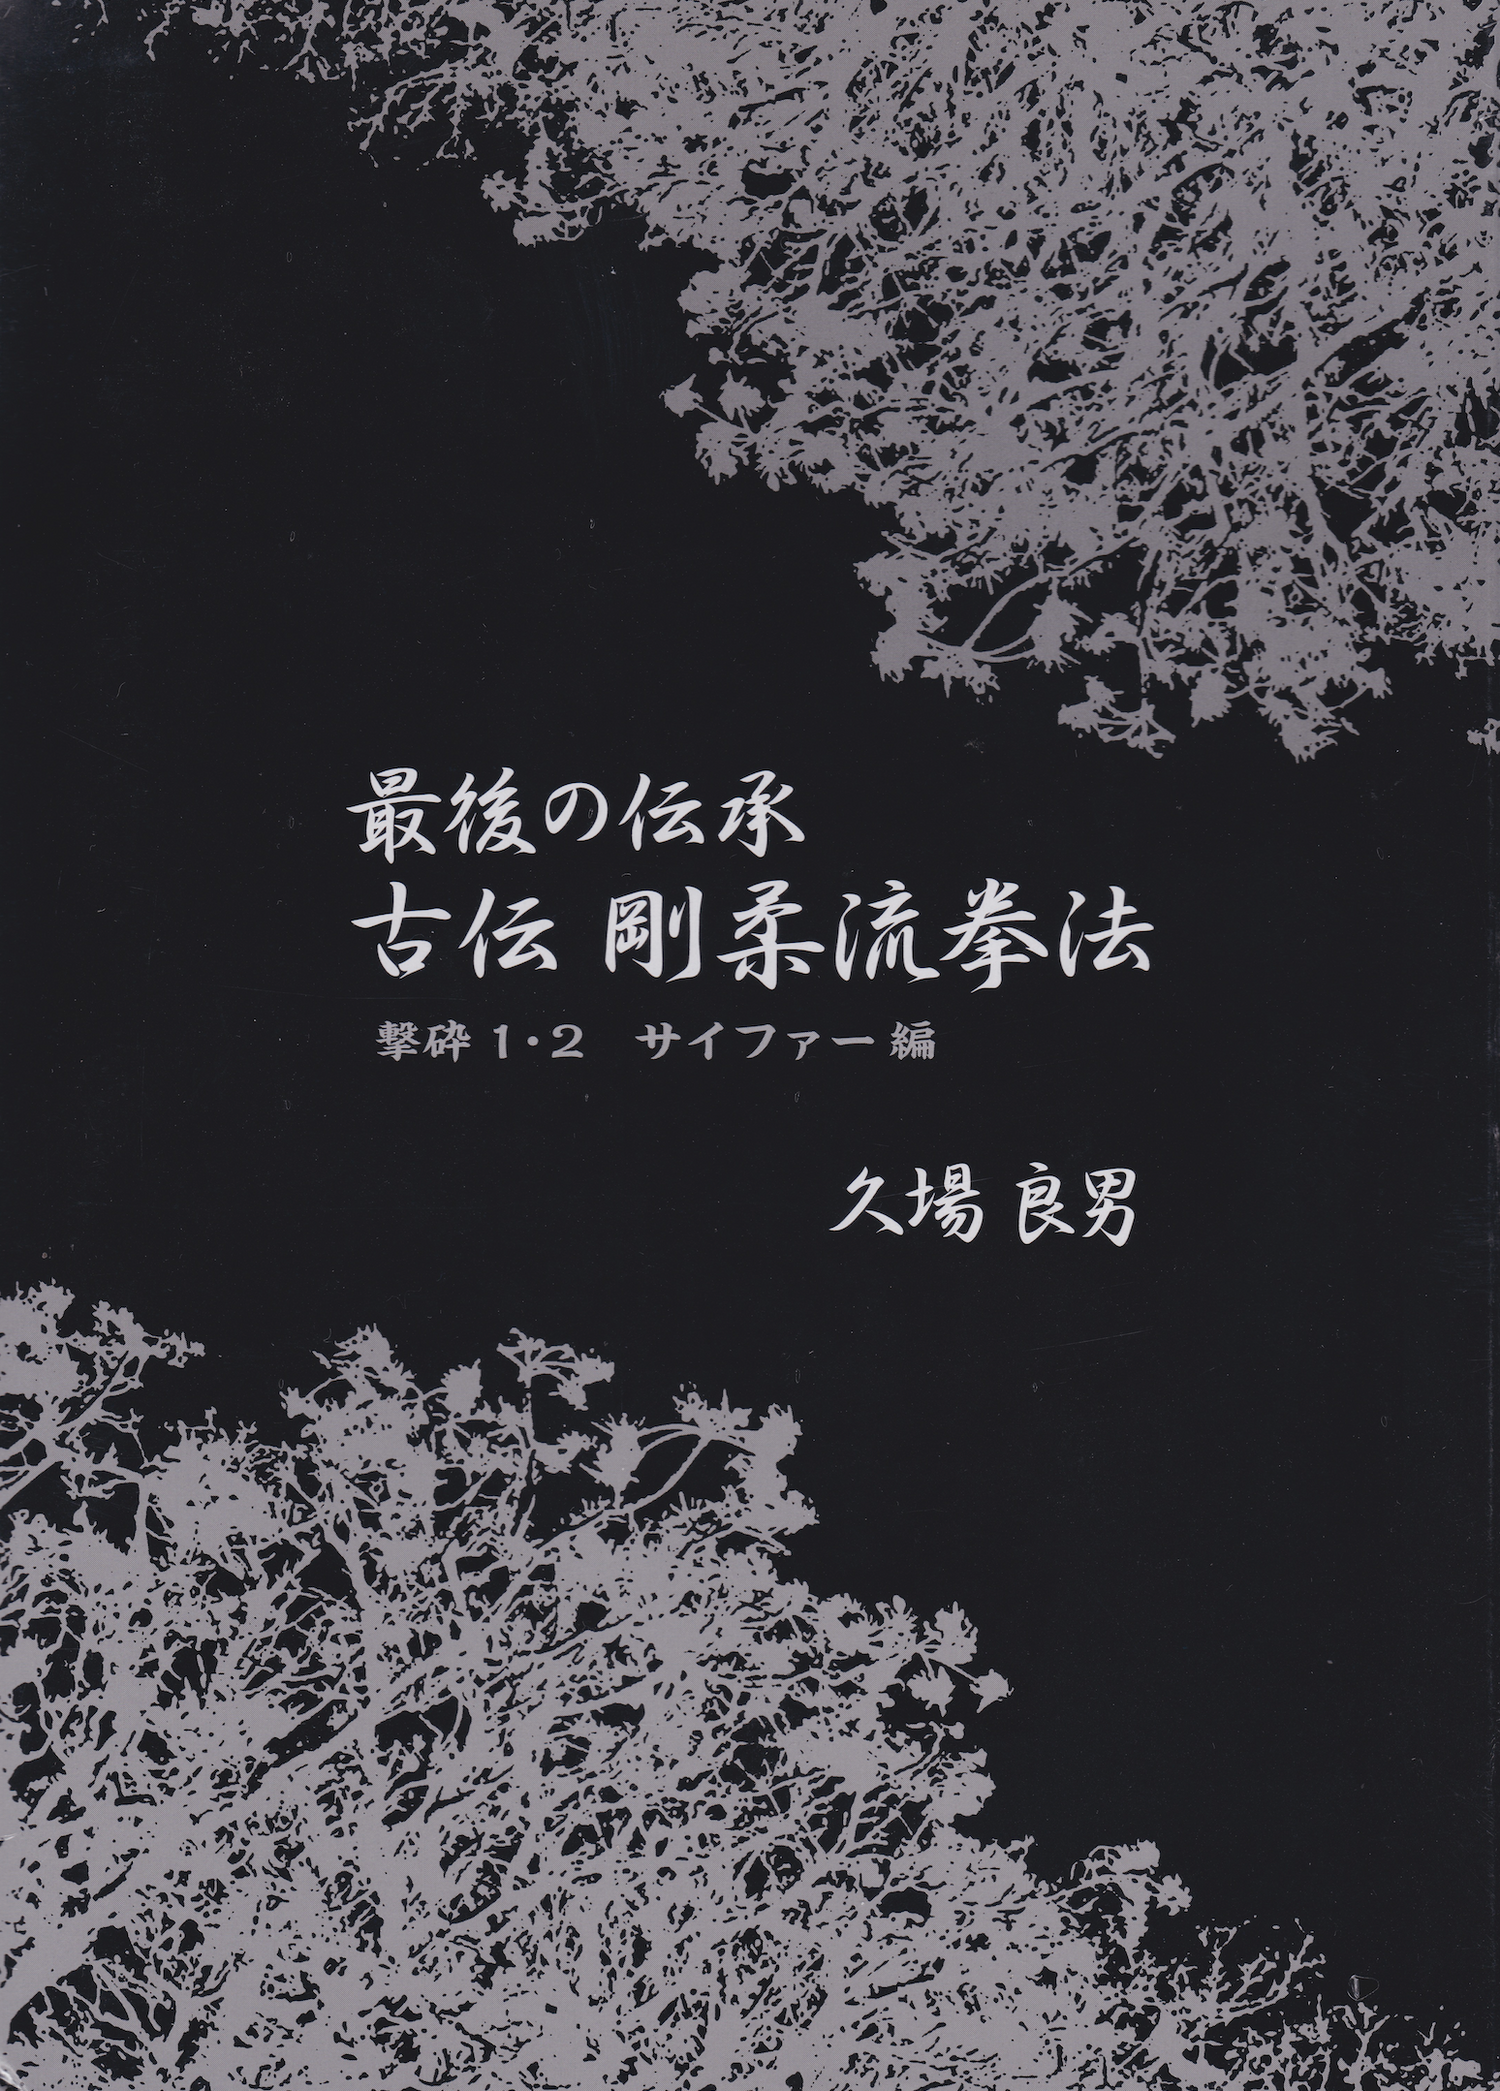 Classical Logic of the Last Traditional Goju Ryu Kempo Book & DVD Vol 1